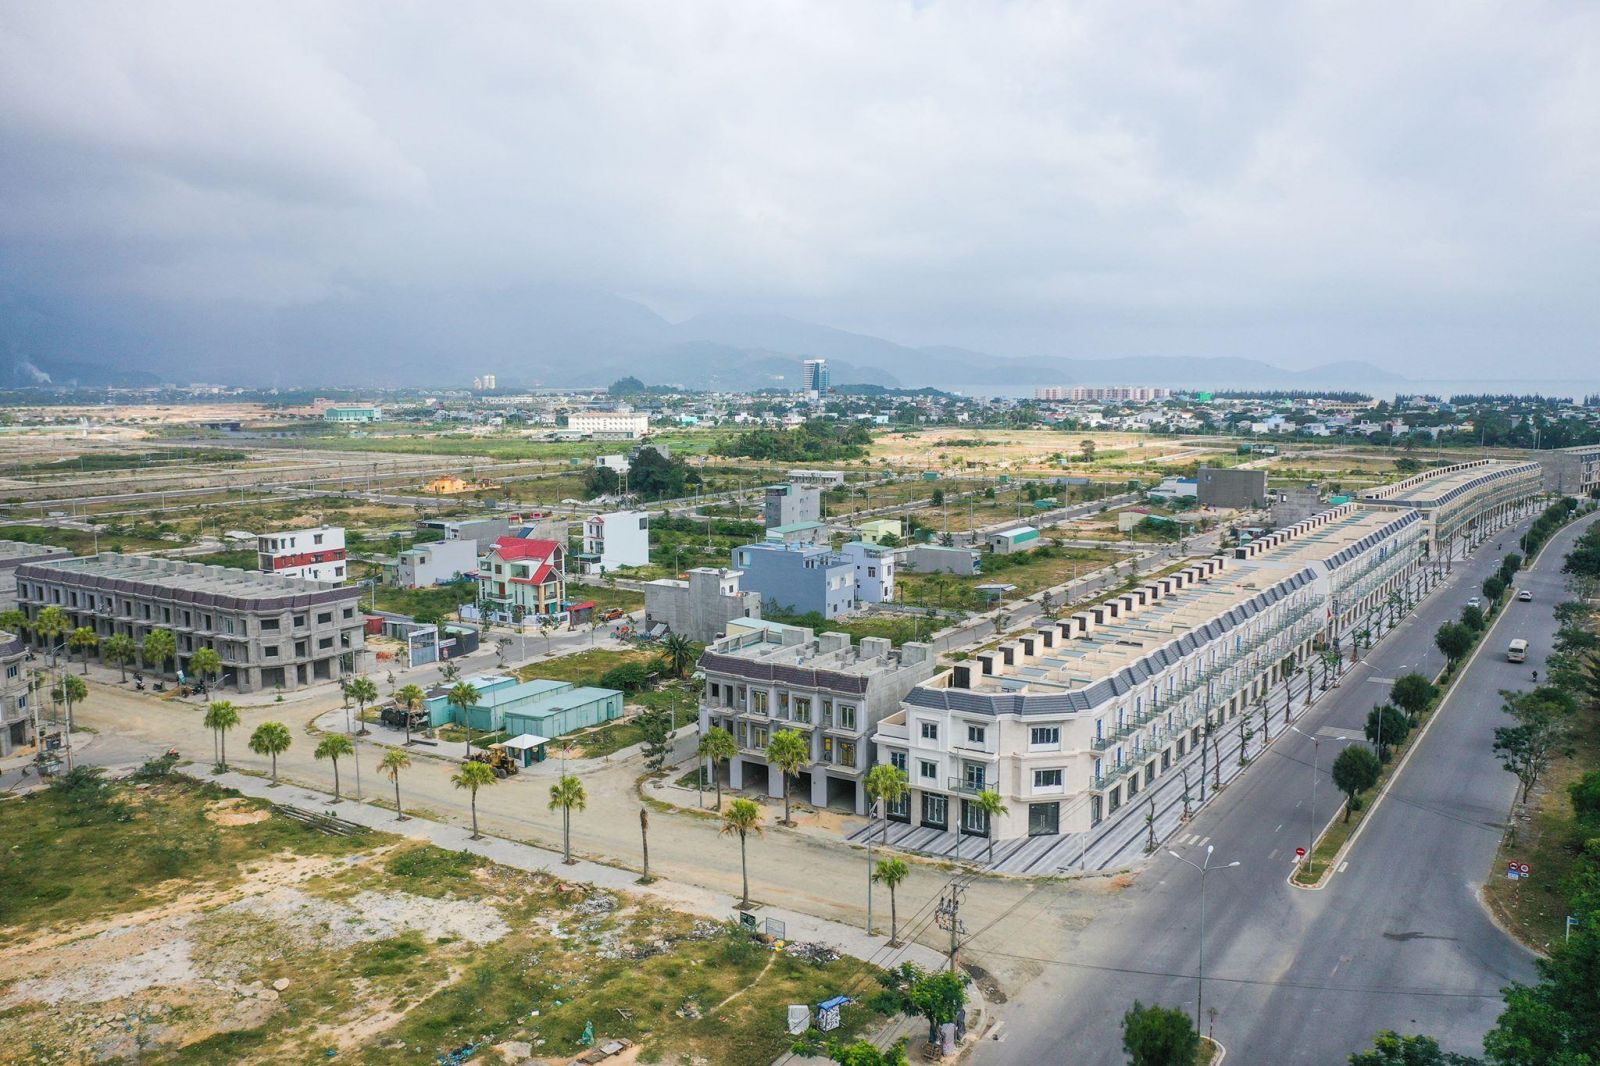 [GÓC CẬP NHẬT] DỰ ÁN SHOPHOUSE LAKESIDE INFINITY THÁNG 2/2020 - Viet Nam Smart City